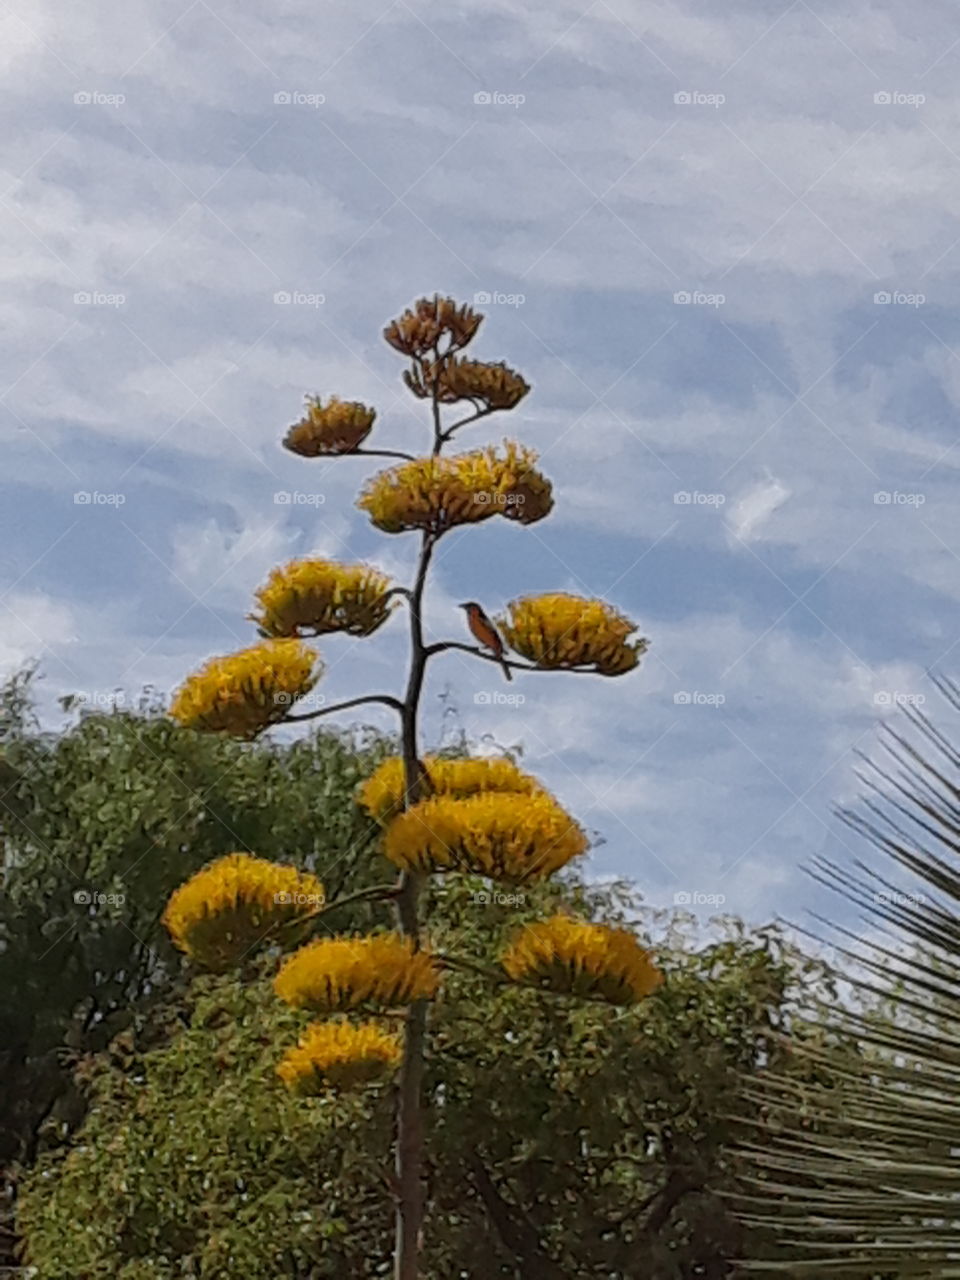 Oriole on a Cactus Flower